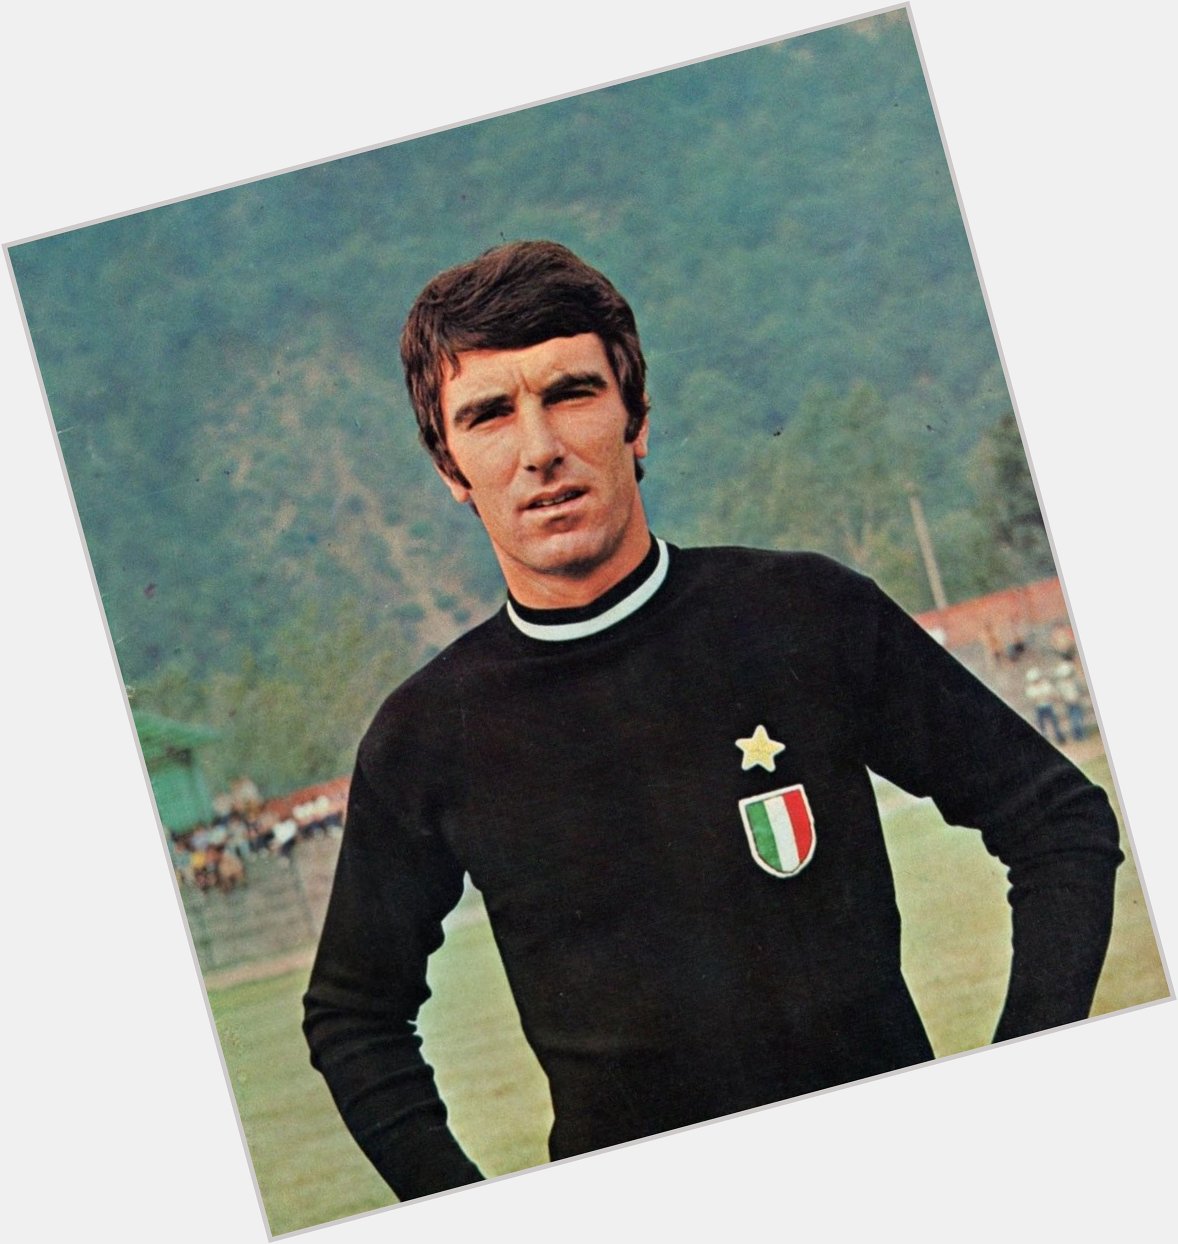 Happy birthday to Juventus legend Dino Zoff, who turns 76 today.

Games: 476 : 9 